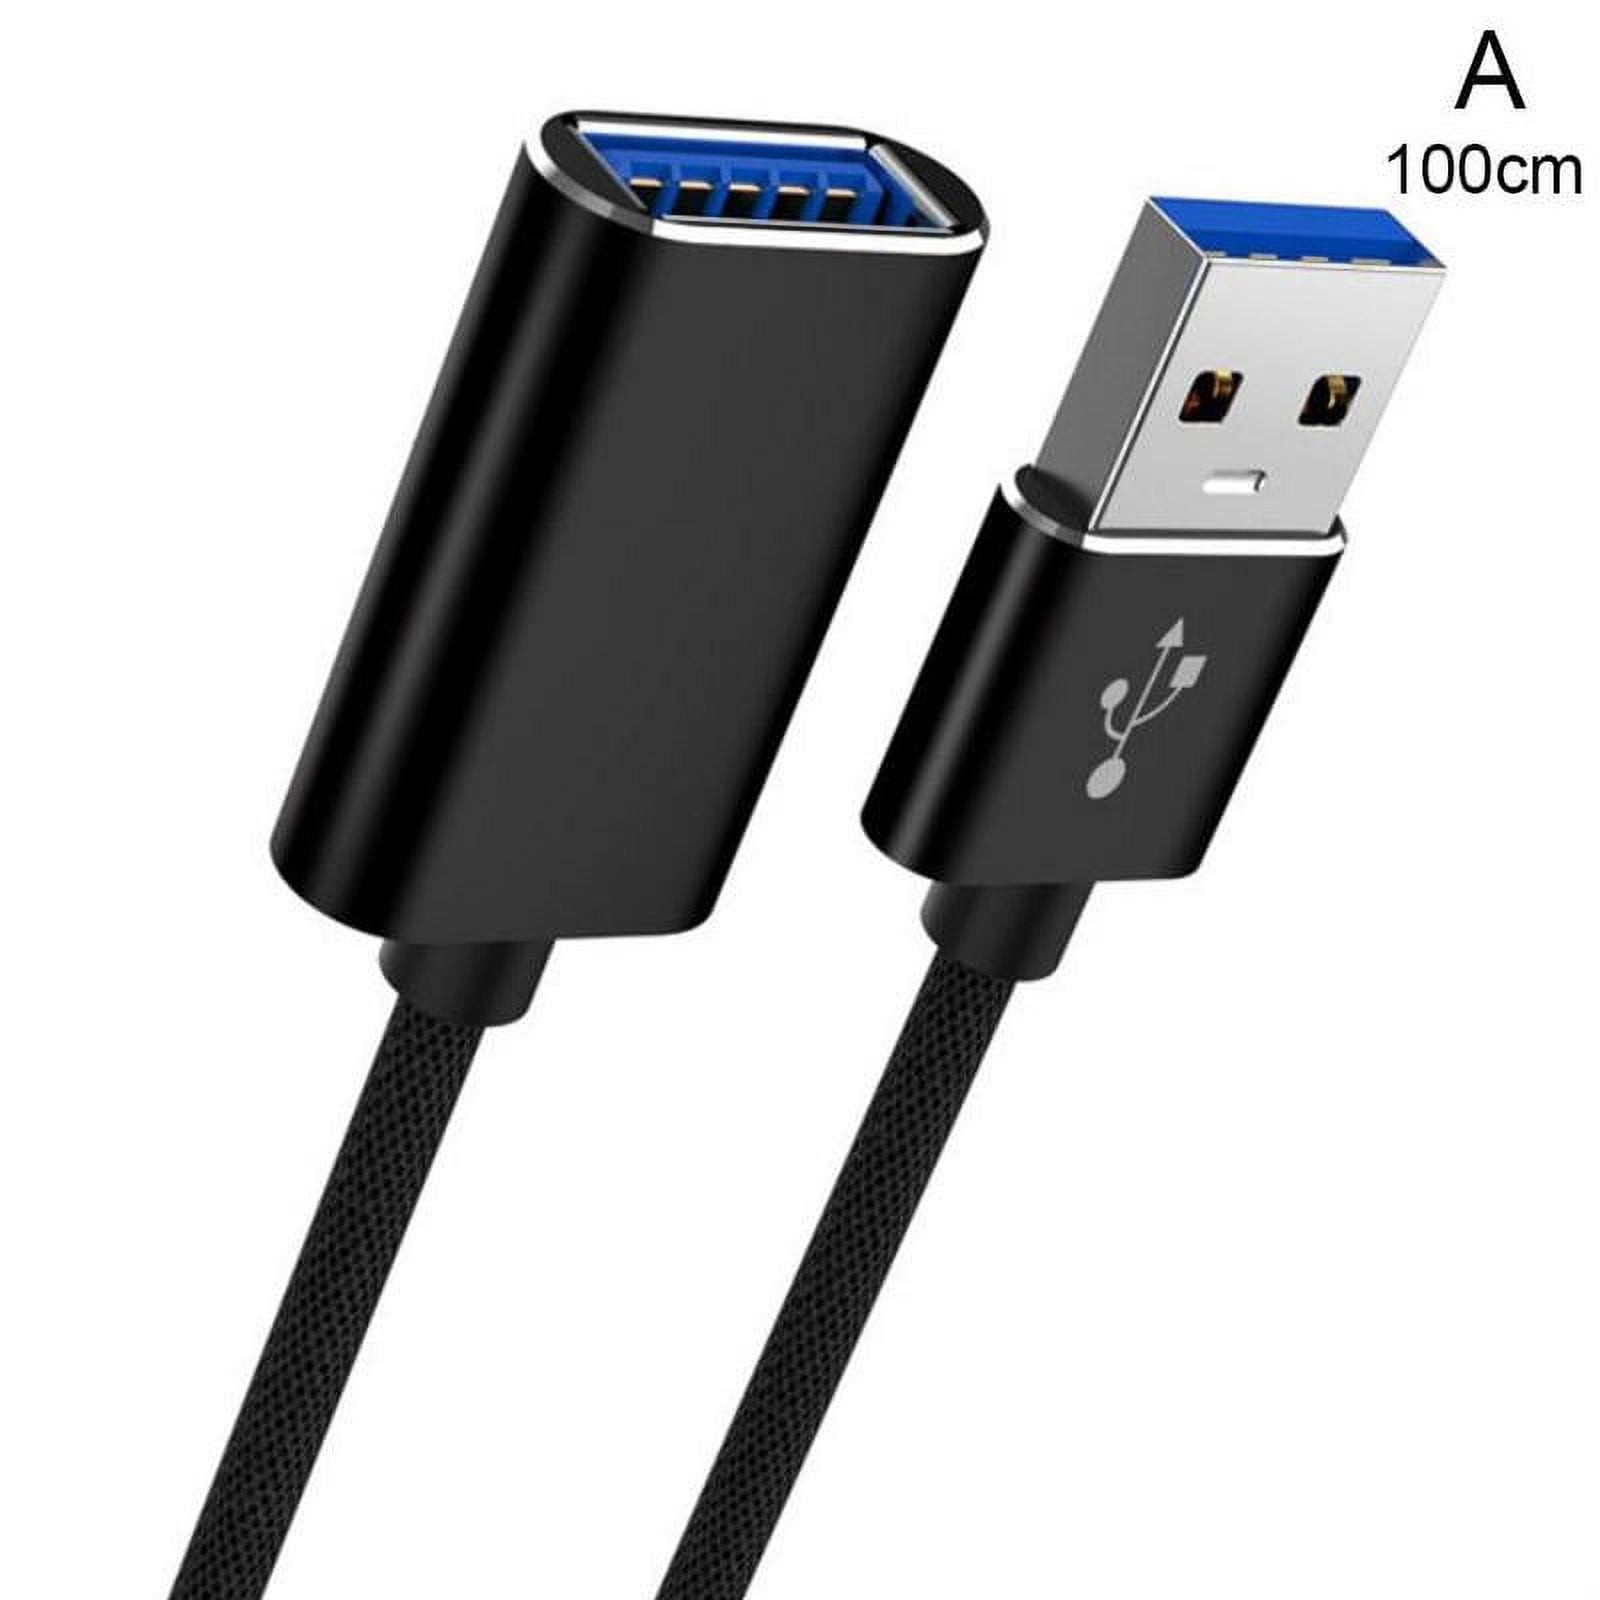 2m Black USB 3.0 Extension Cable M/F - USB 3.0 Cables, Cables